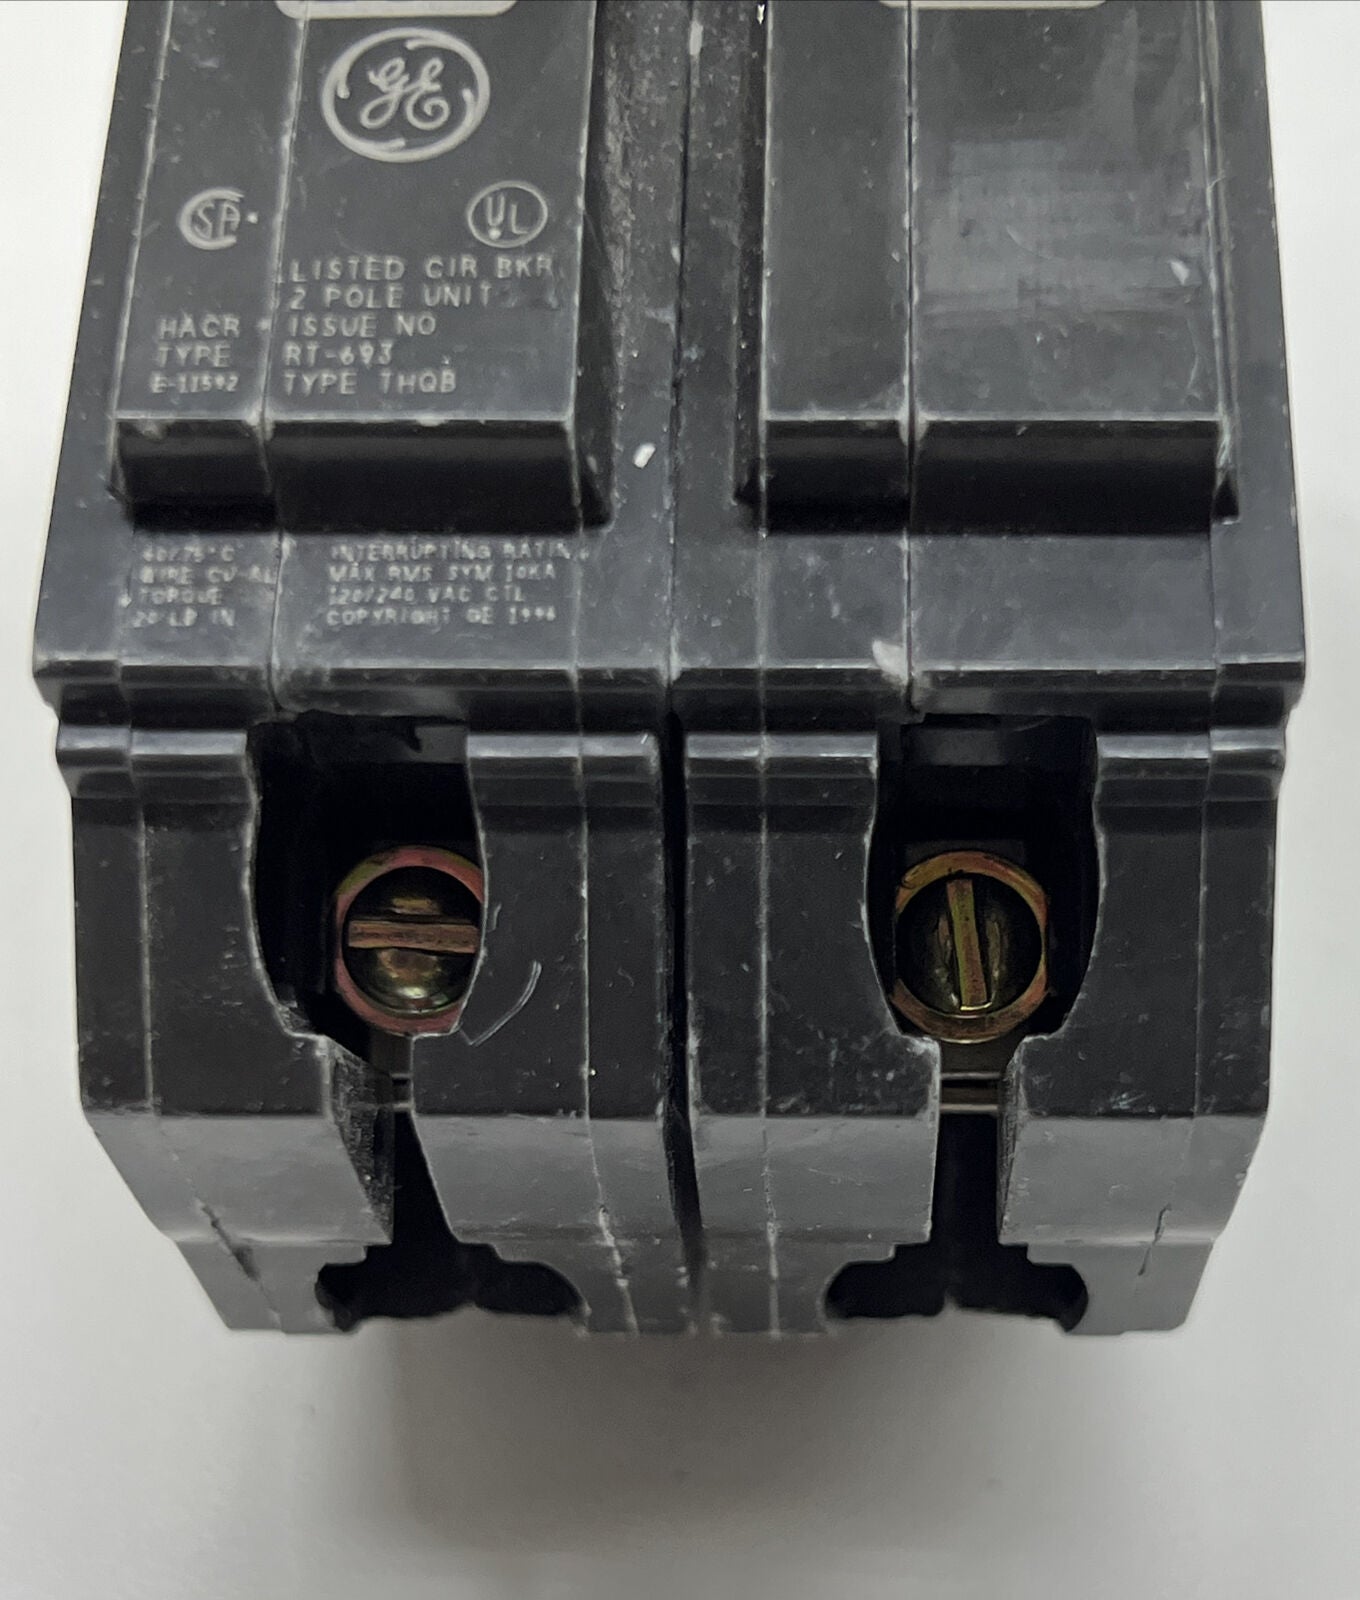 GE GENERAL ELECTRIC E-11592 RT-690 THQB 2-Pole 20A Circuit Breaker (BK106) - 0